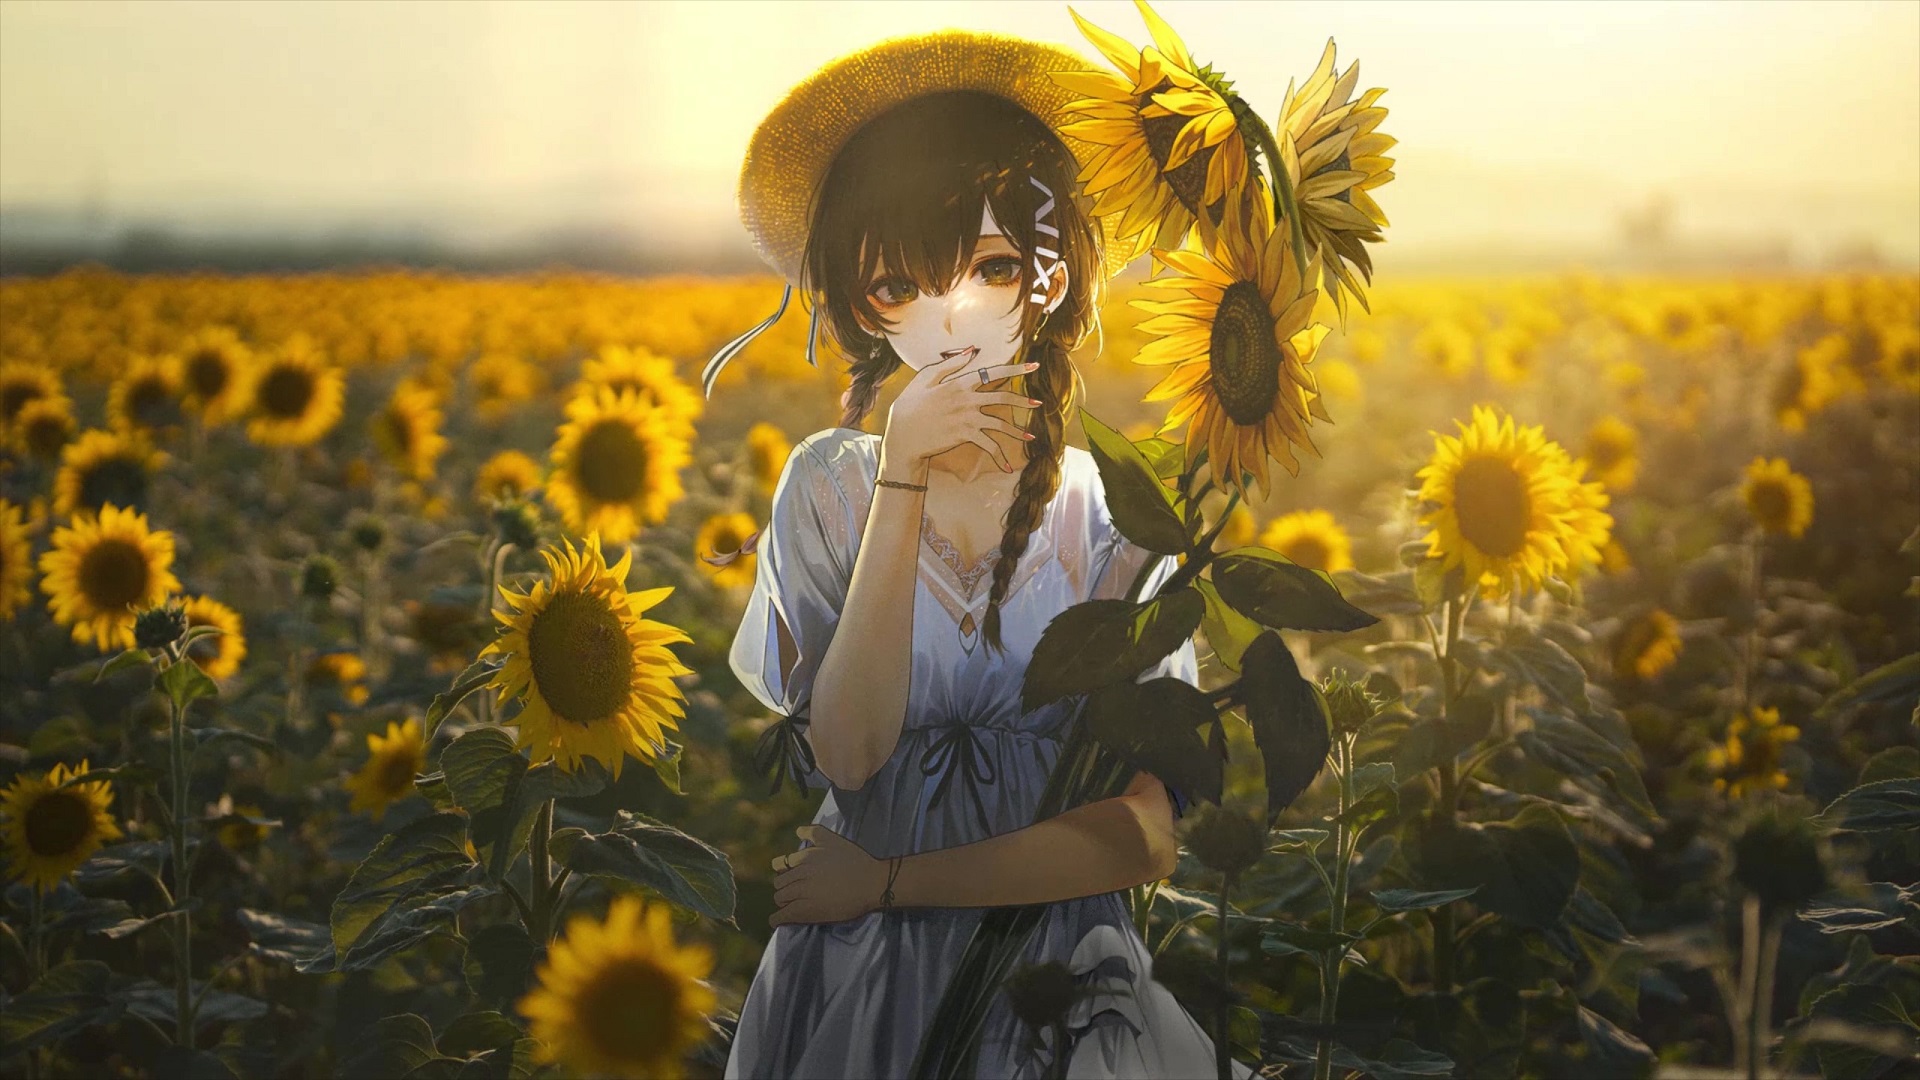 Anime Pop Heart — ☆ 【糖tou】 「 Sunflower Girl 」 ☆ ✓ republished...